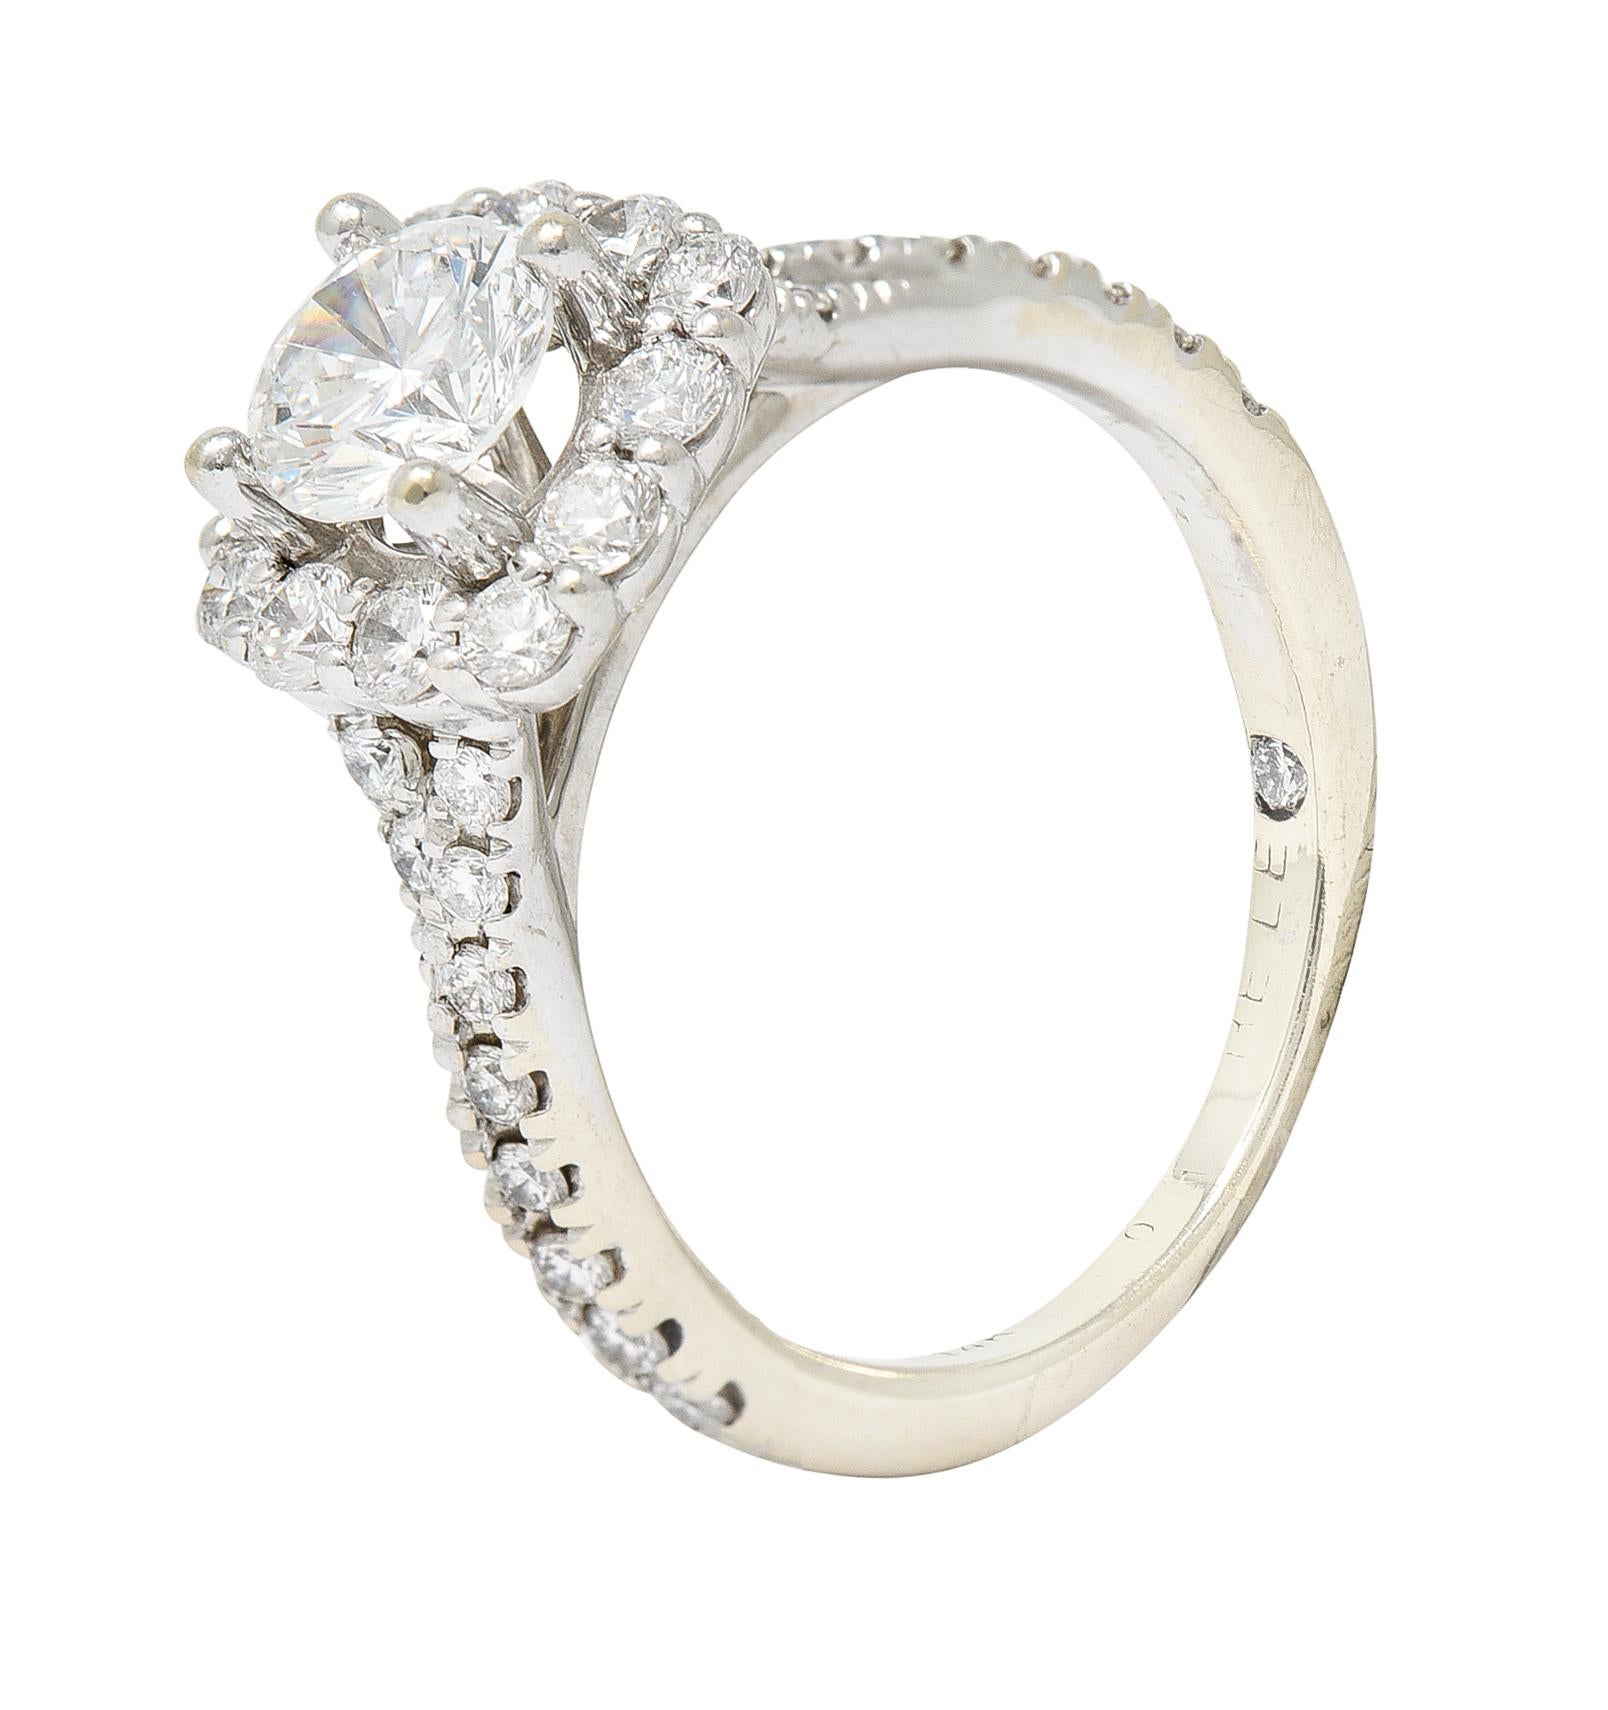 1.18 Carats Ideal Cut Diamond 14 Karat White Gold Cushion Halo Engagement Ring 4